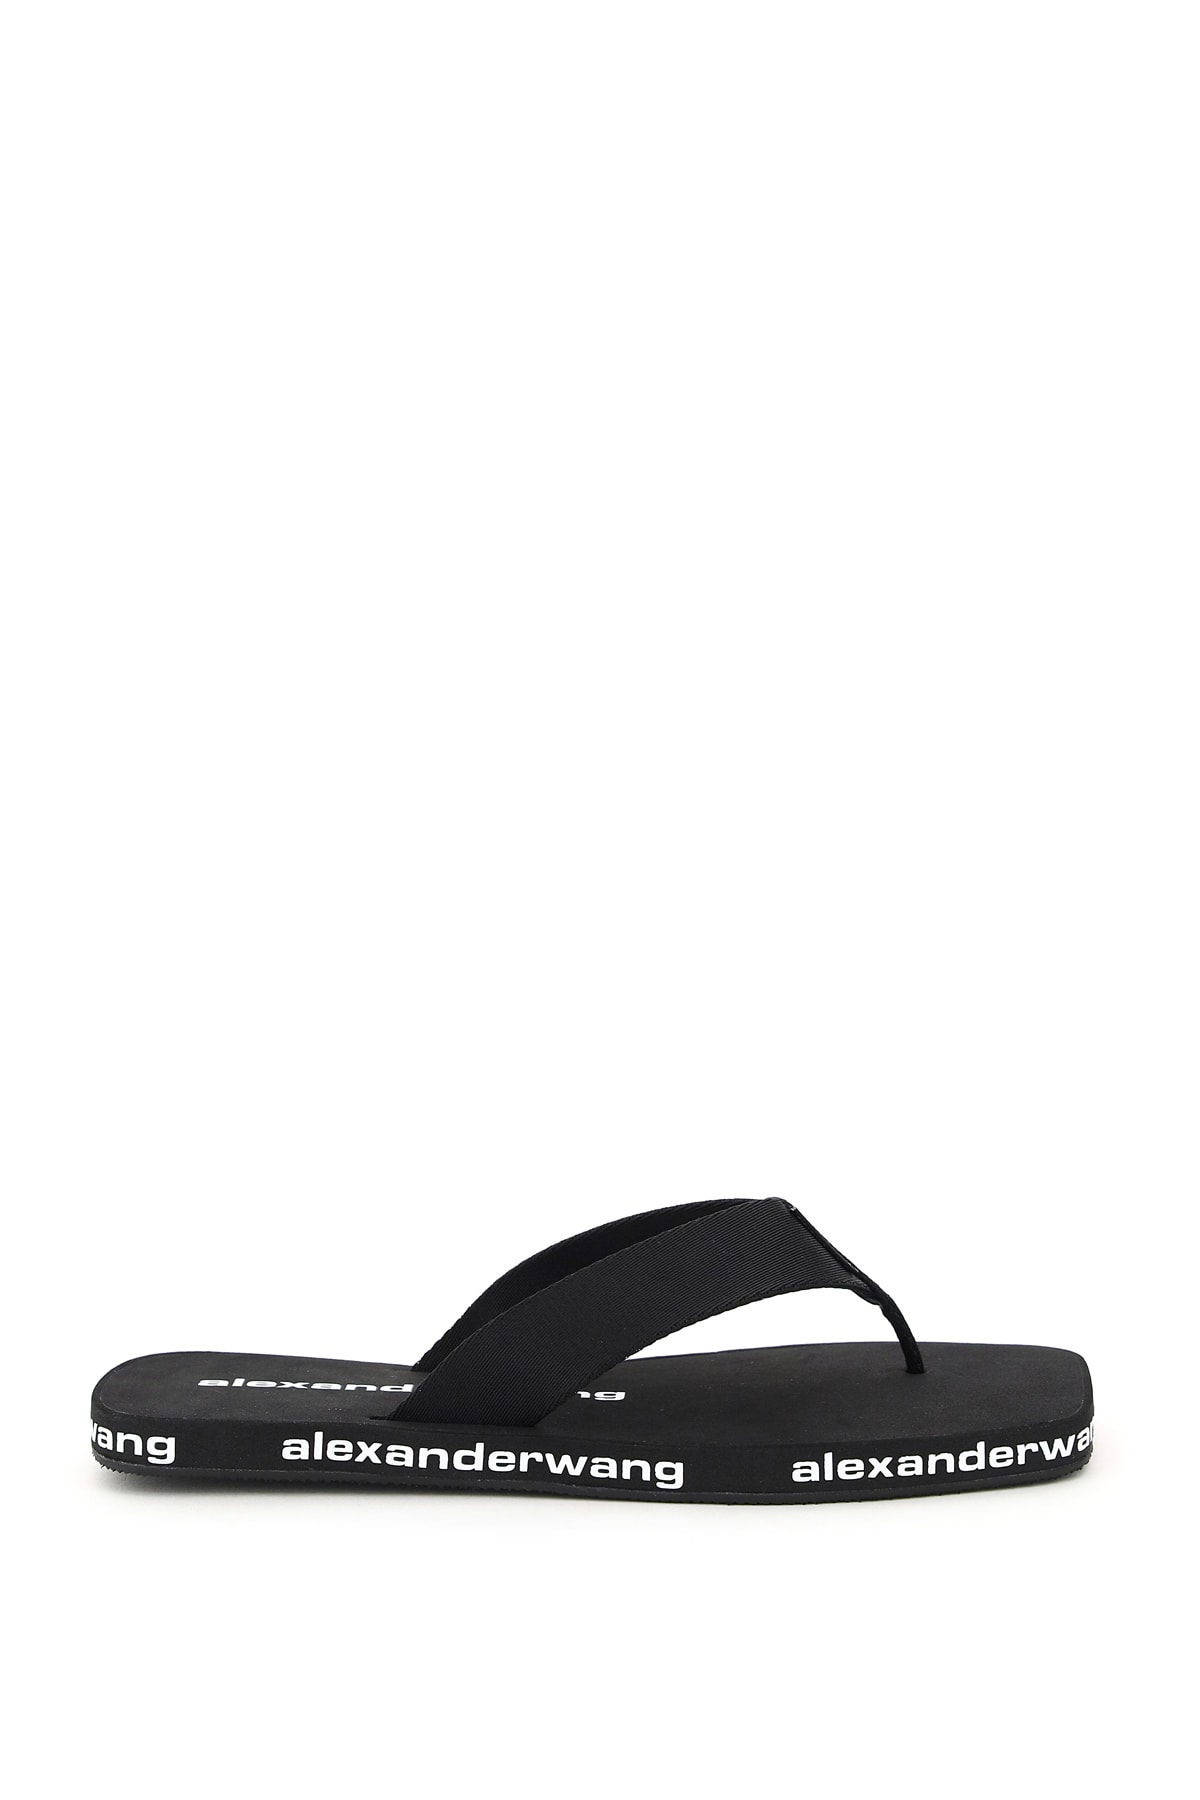 Buy Alexander Wang Nylon Flip Flops online, shop Alexander Wang shoes with free shipping